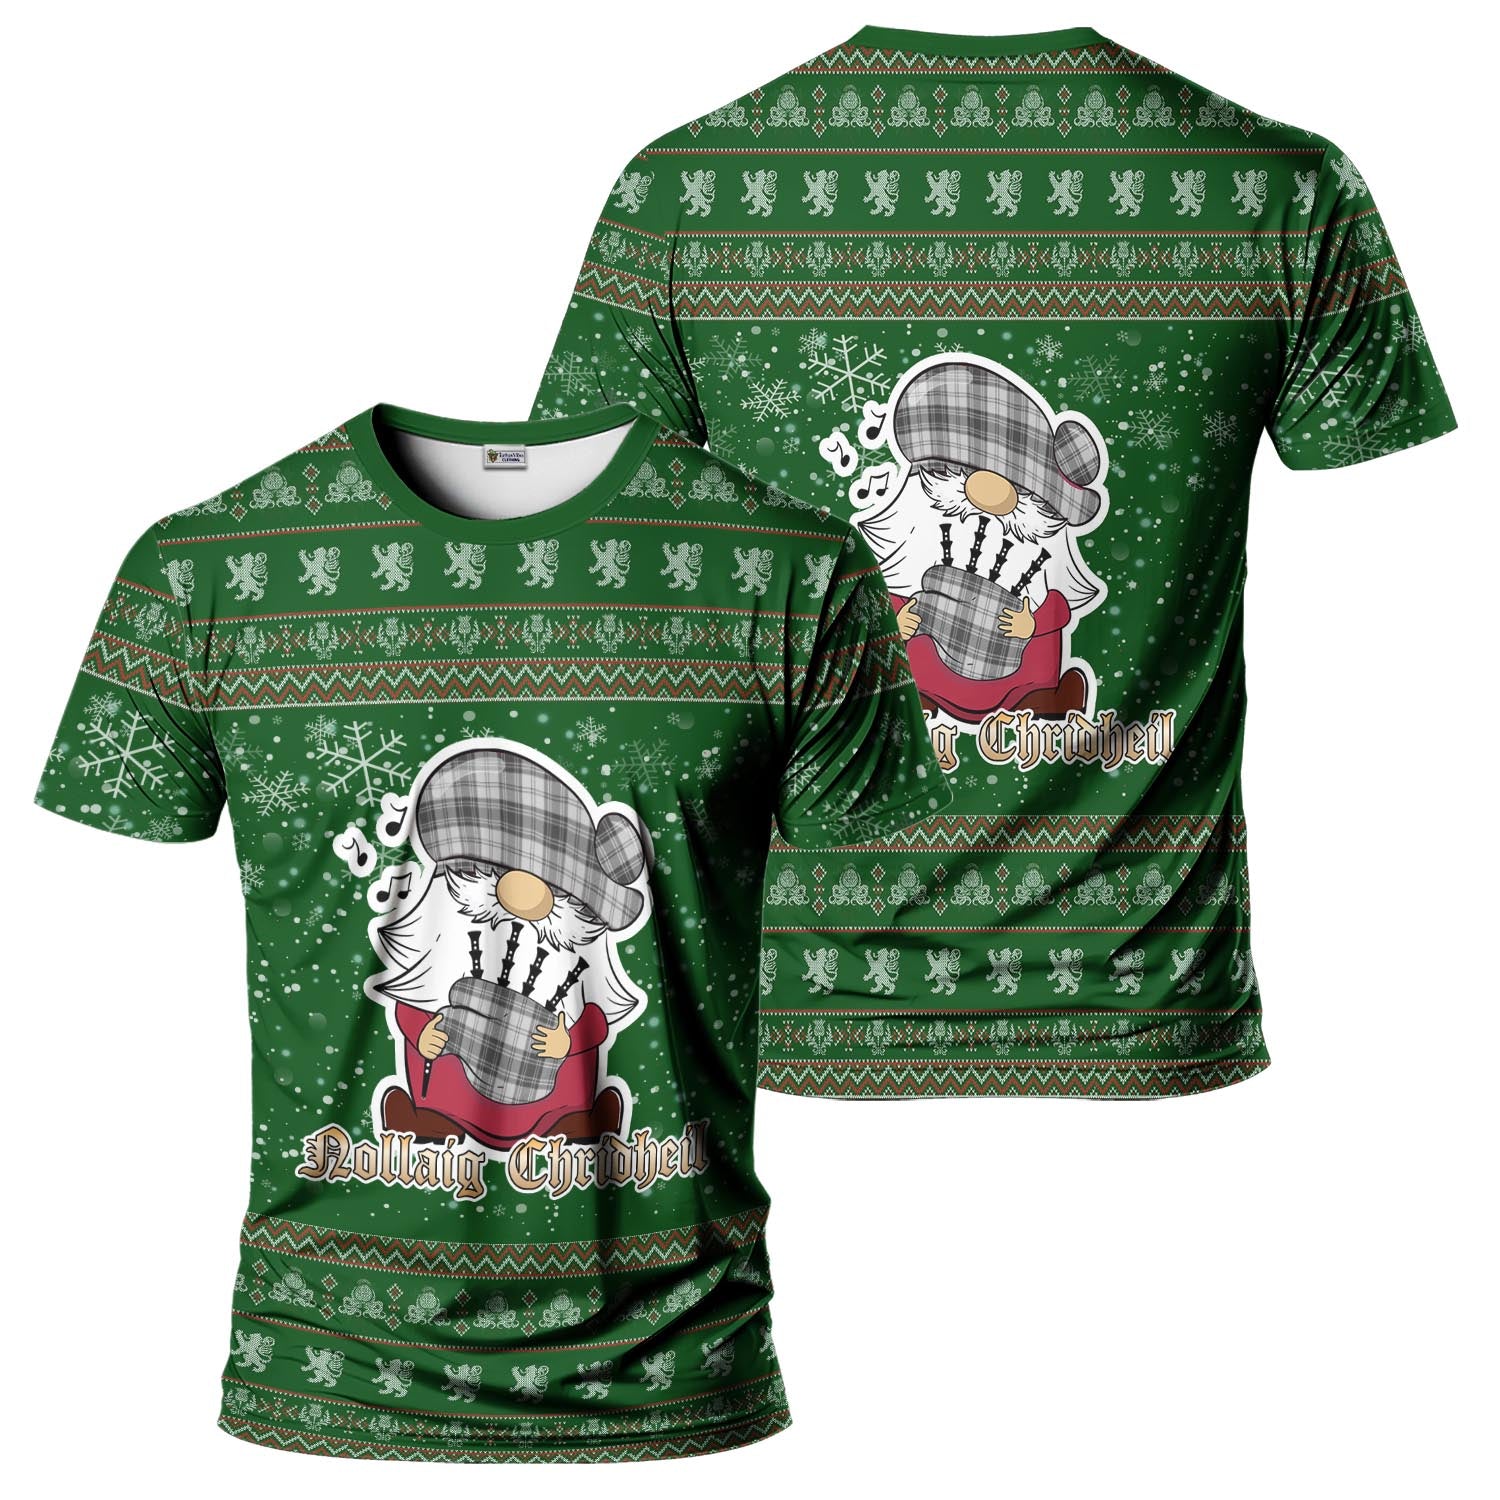 Glendinning Clan Christmas Family T-Shirt with Funny Gnome Playing Bagpipes Men's Shirt Green - Tartanvibesclothing